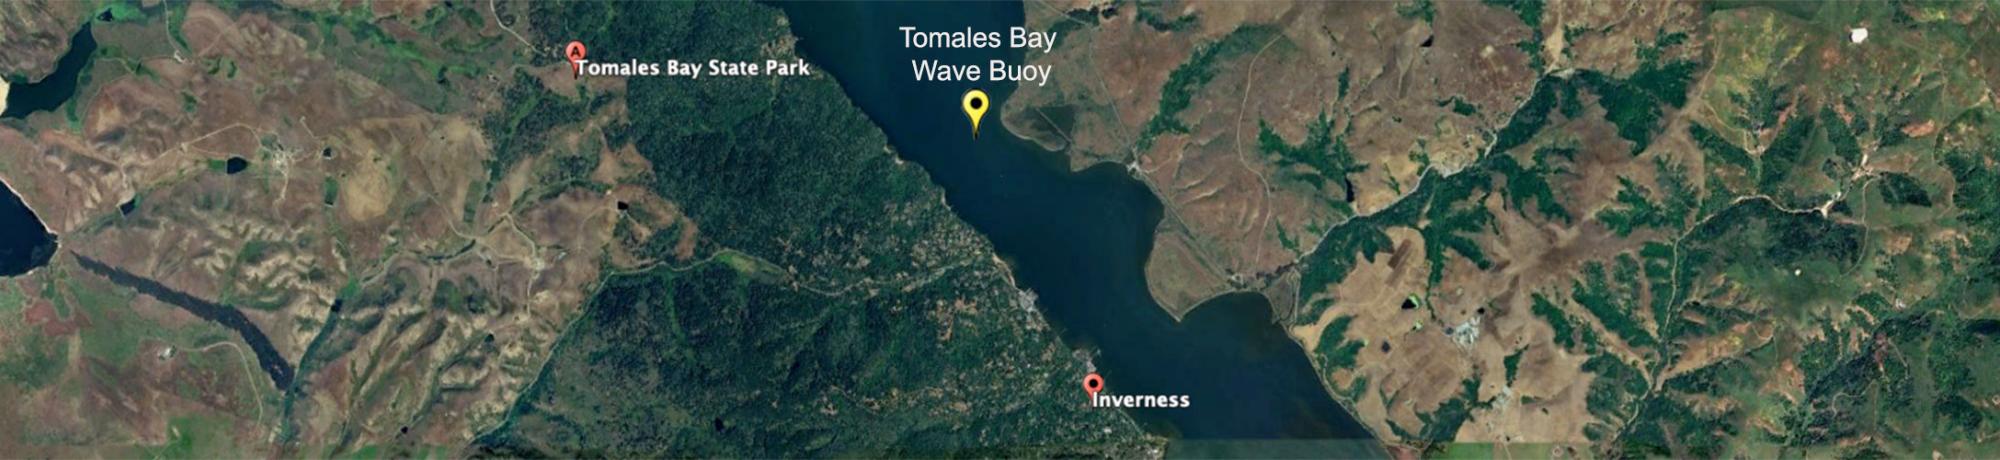 Tomales Bay Wave Buoy